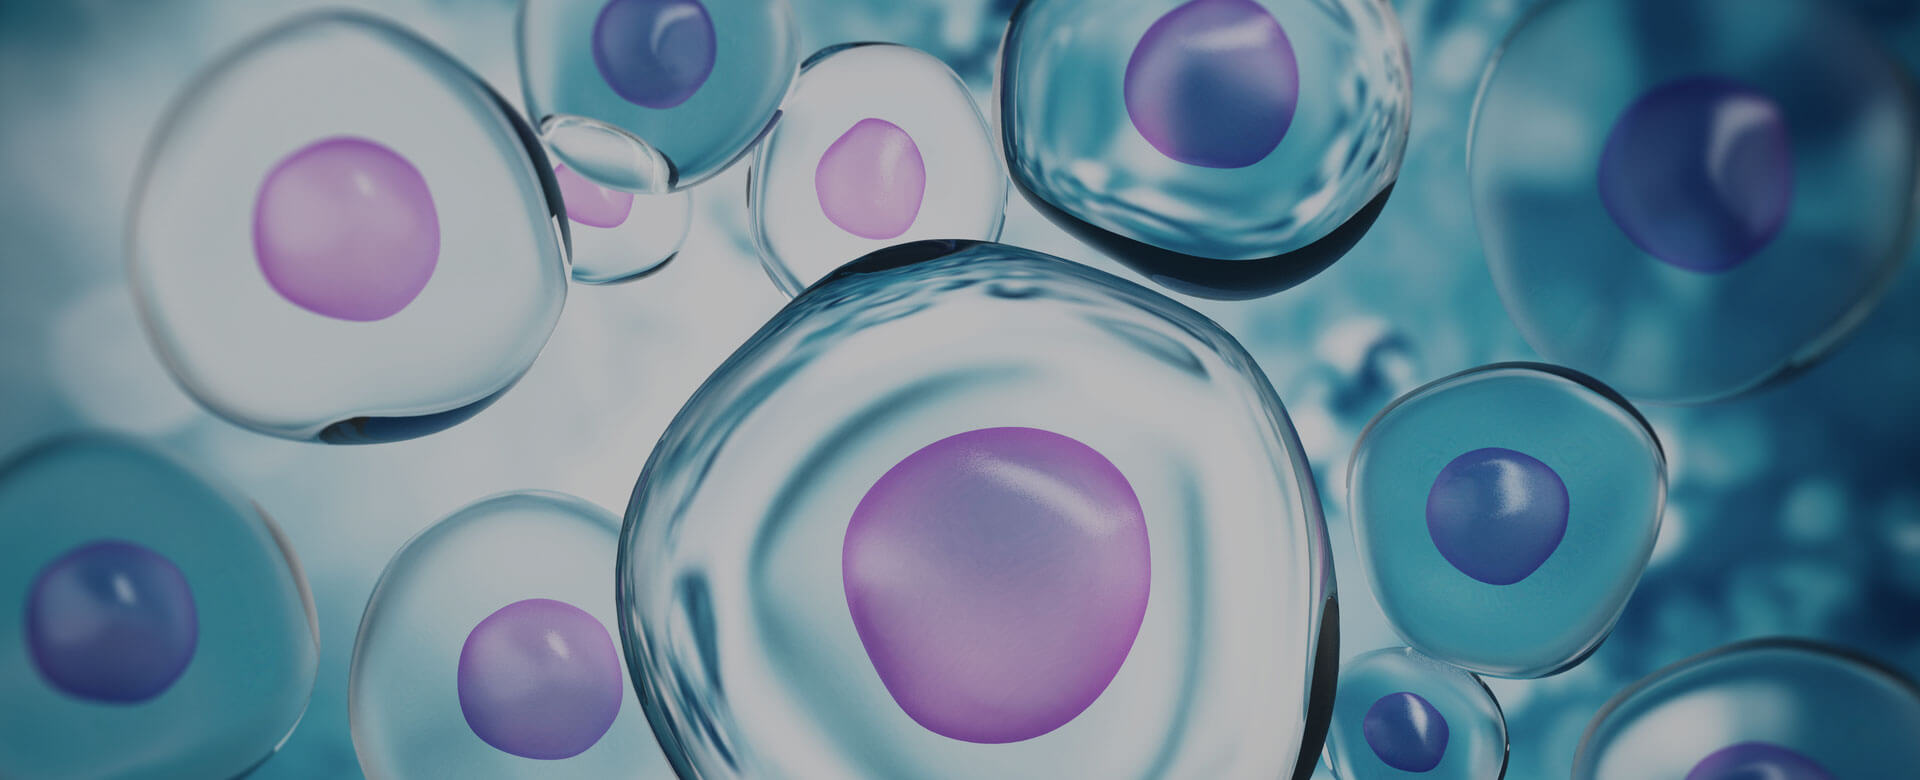 COVID-19, cellule staminali fra i trattamenti più promettenti